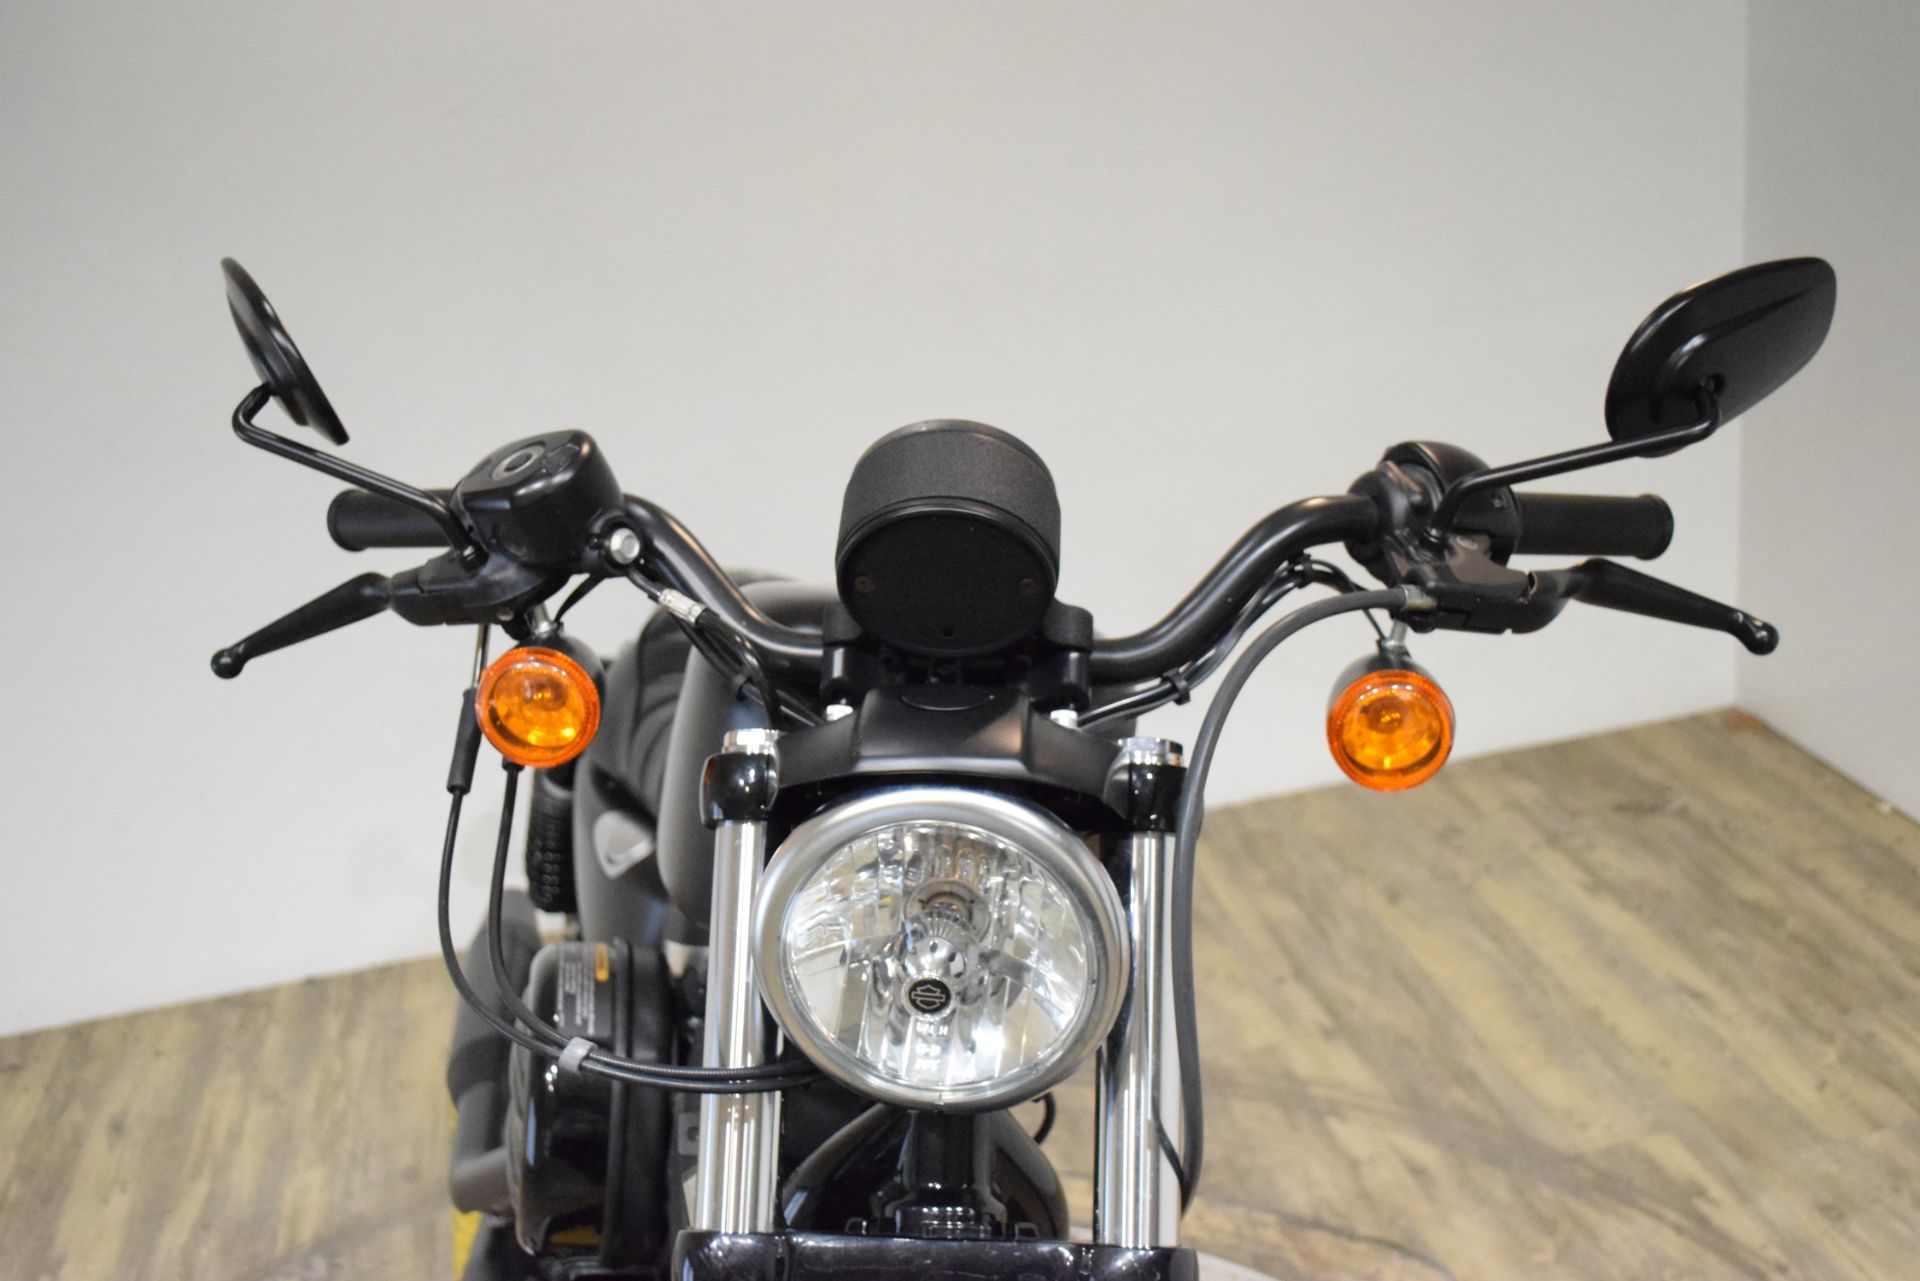 2019 Harley-Davidson Iron 883™ in Wauconda, Illinois - Photo 13